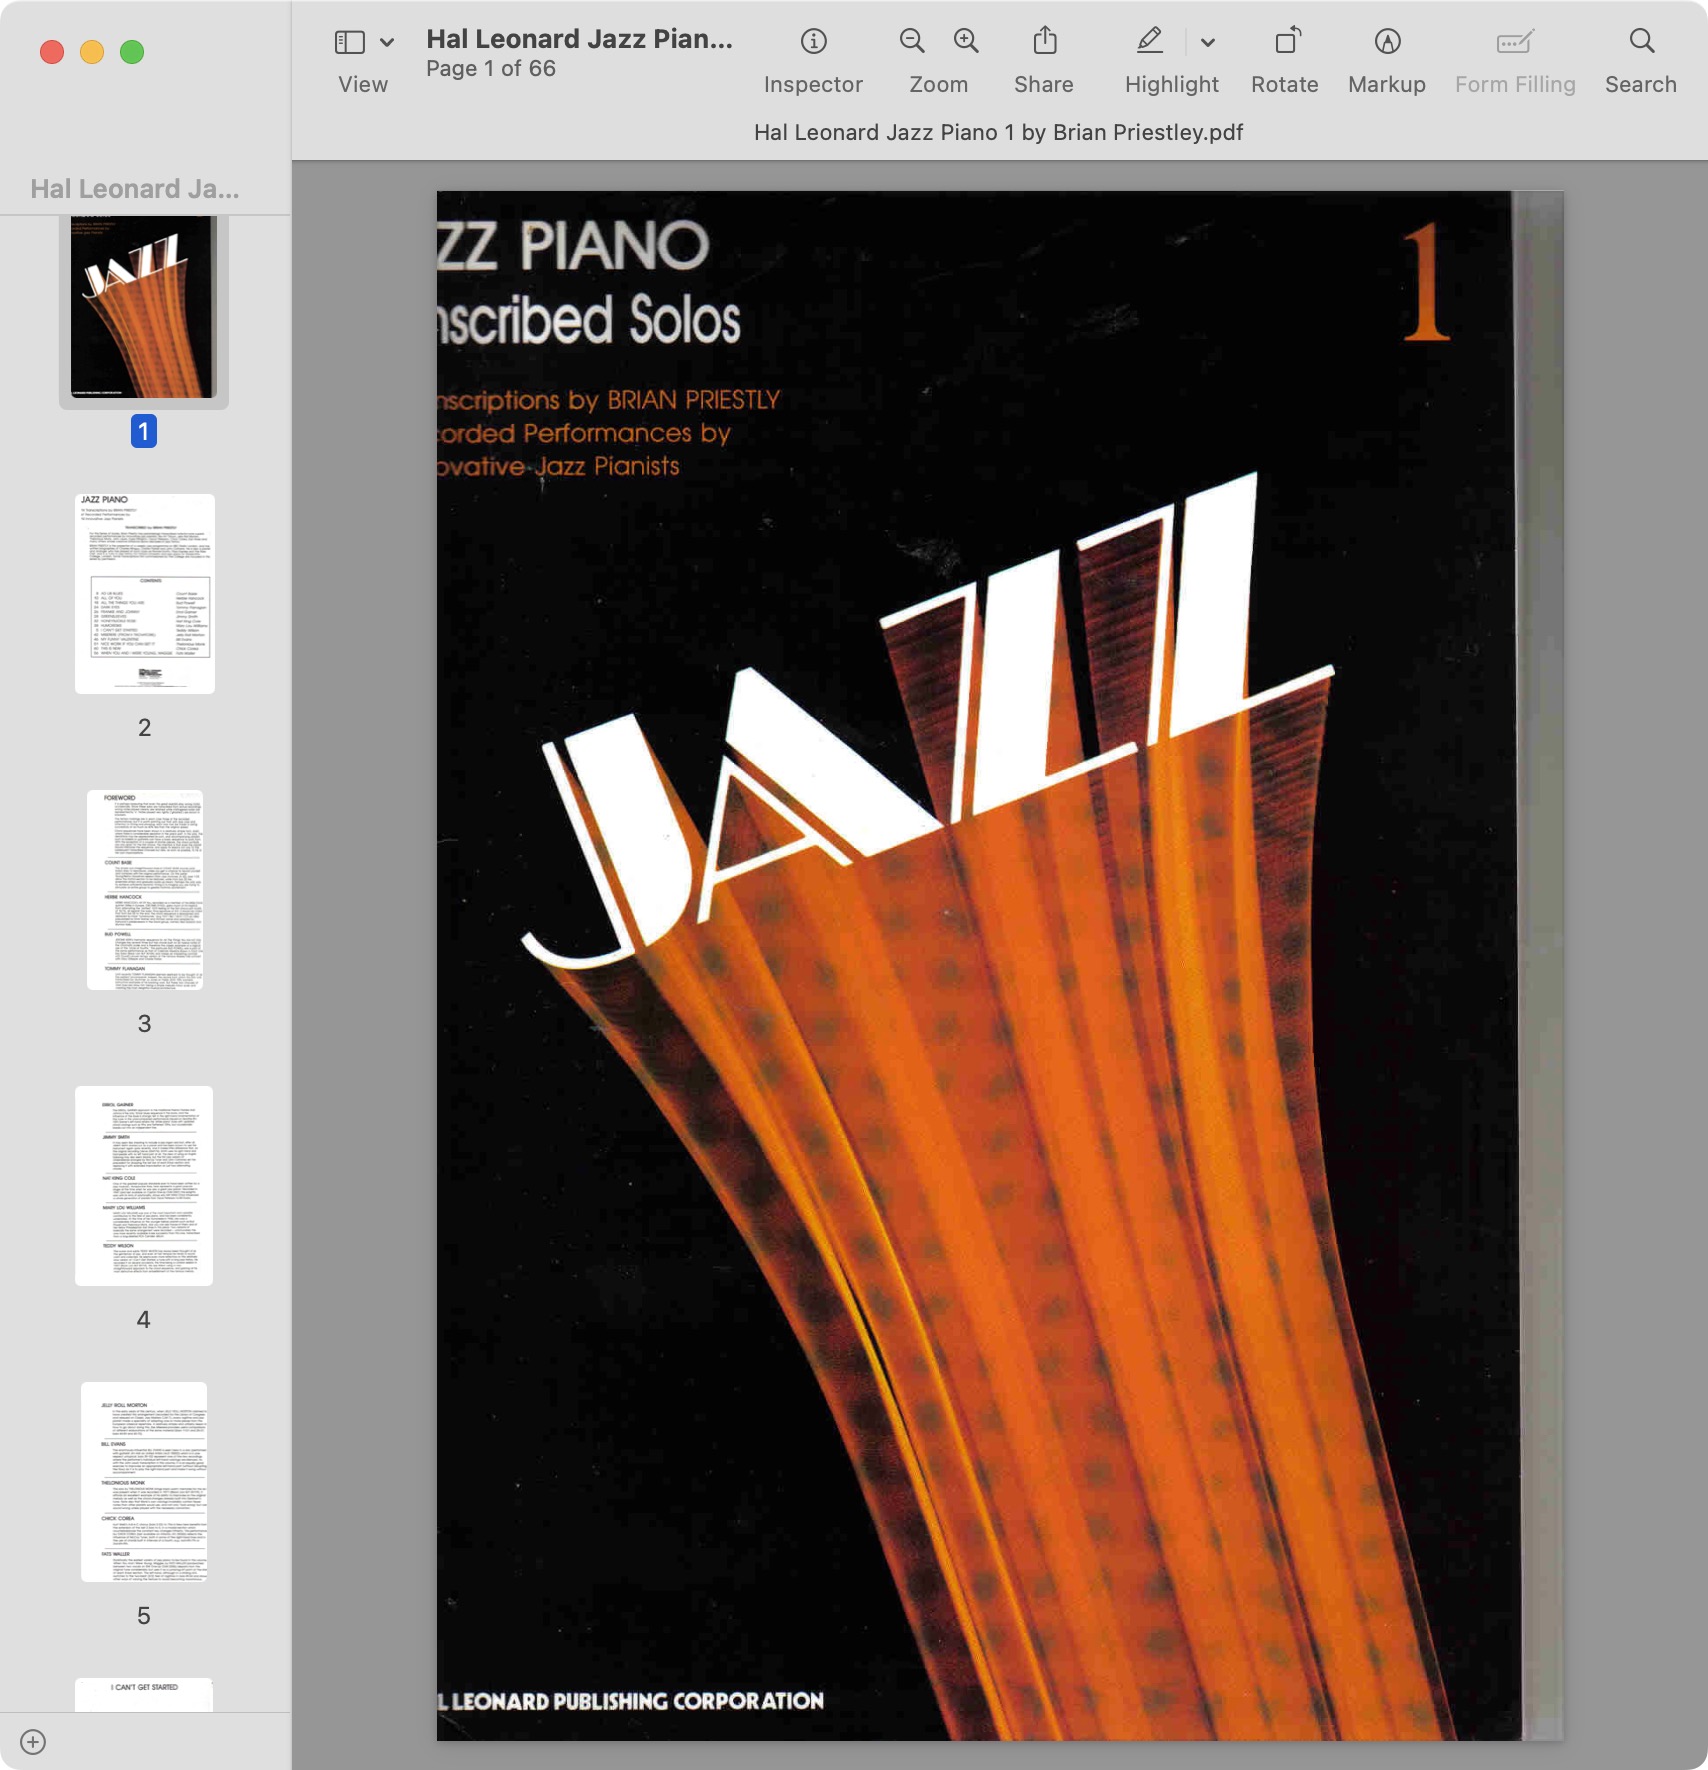 Hal Leonard Jazz Piano 1 by Brian Priestley.jpg